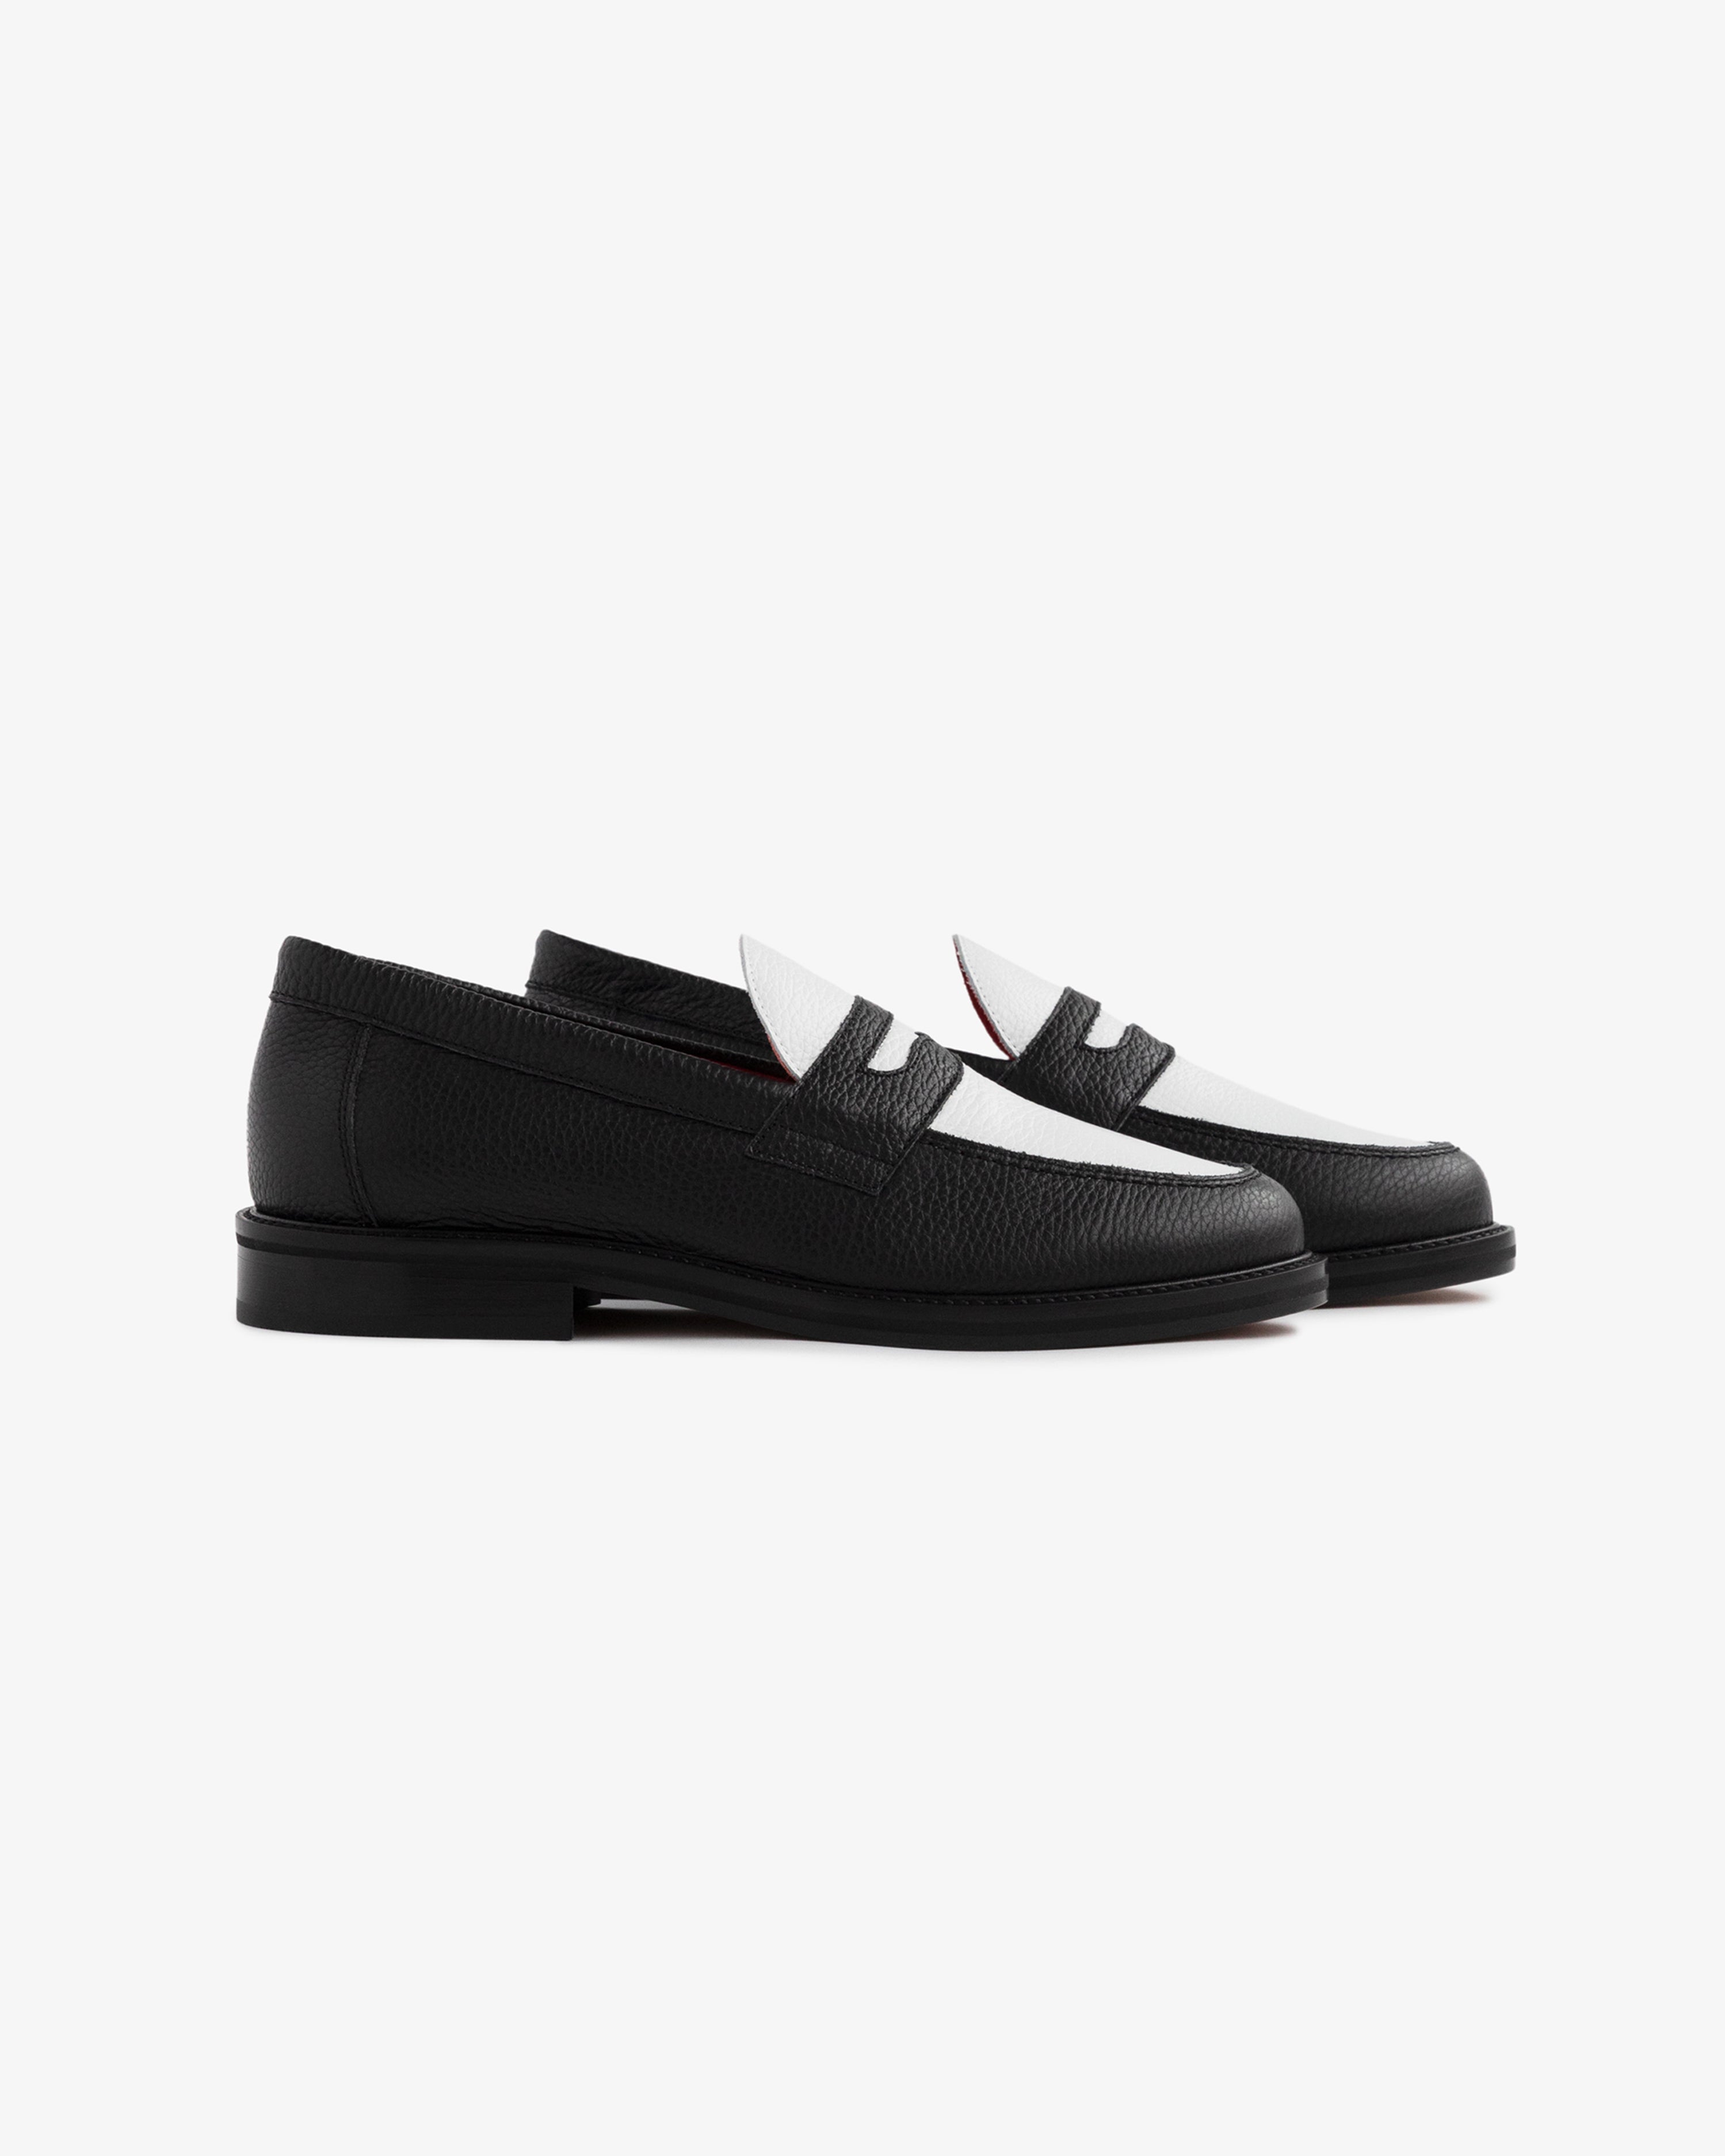 Louis Vuitton Black leather Sneakers, Size 8 Men (40.5/41 EU), DIY